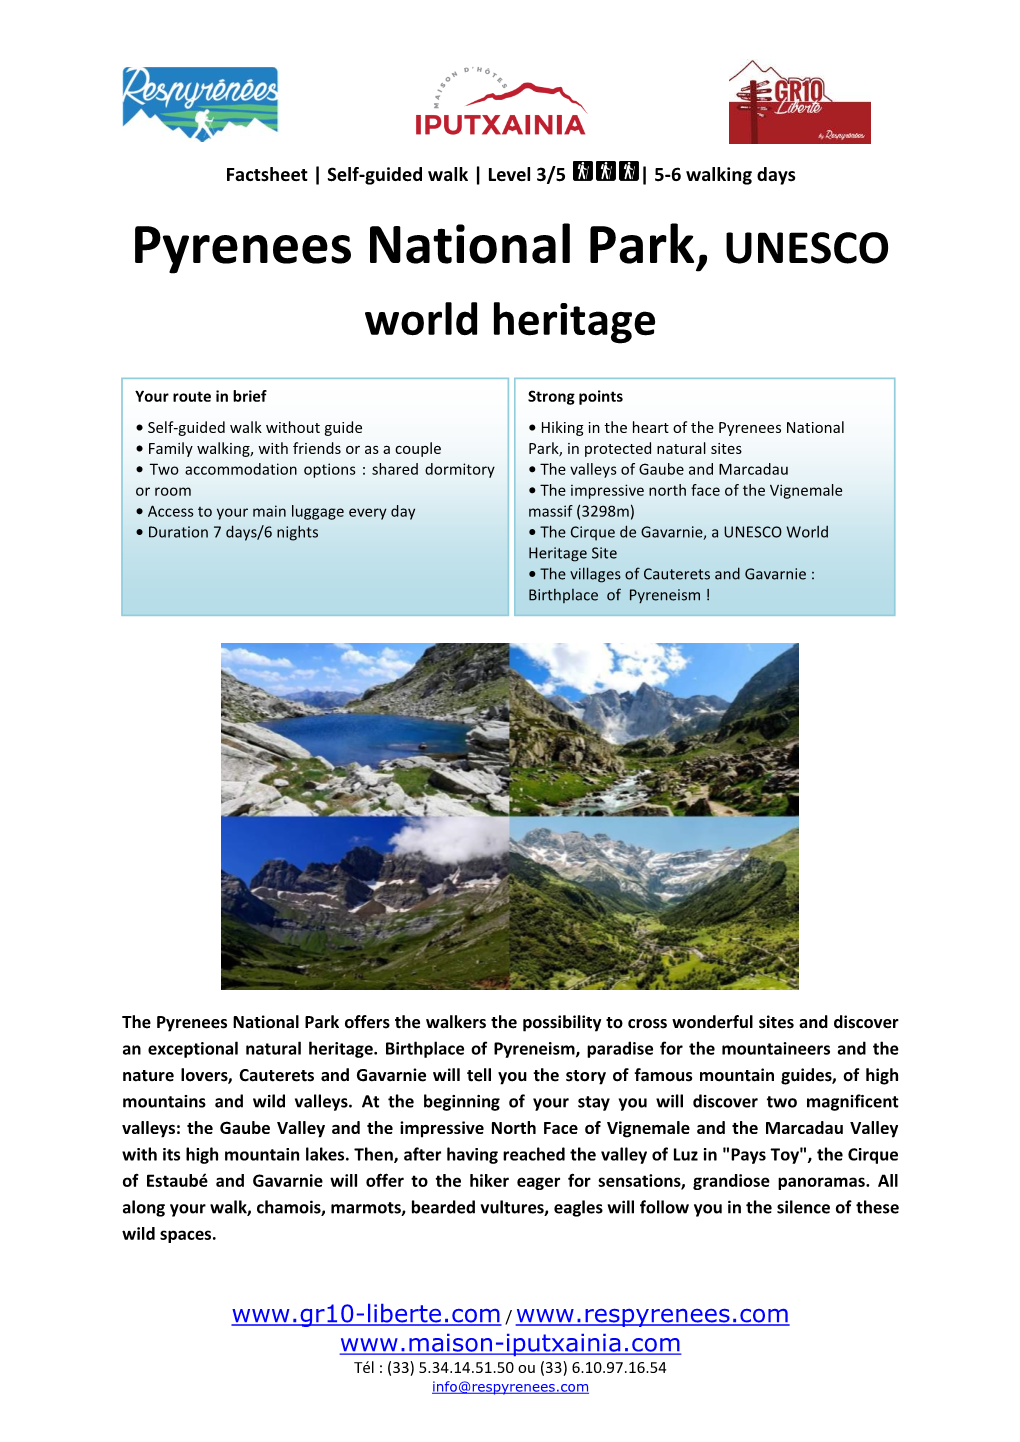 Pyrenees National Park, UNESCO World Heritage